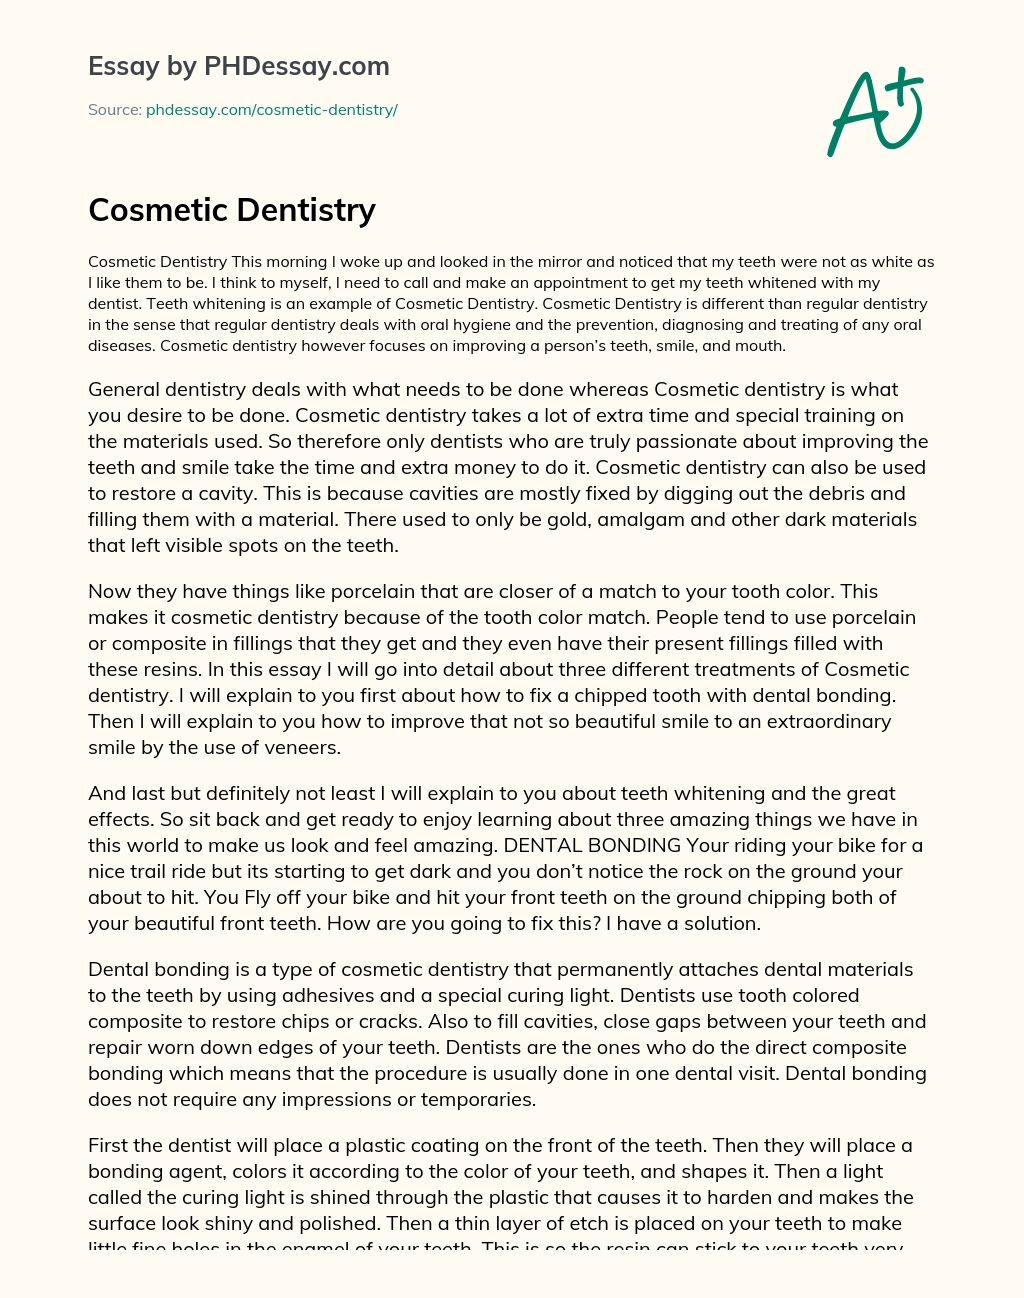 Cosmetic Dentistry essay